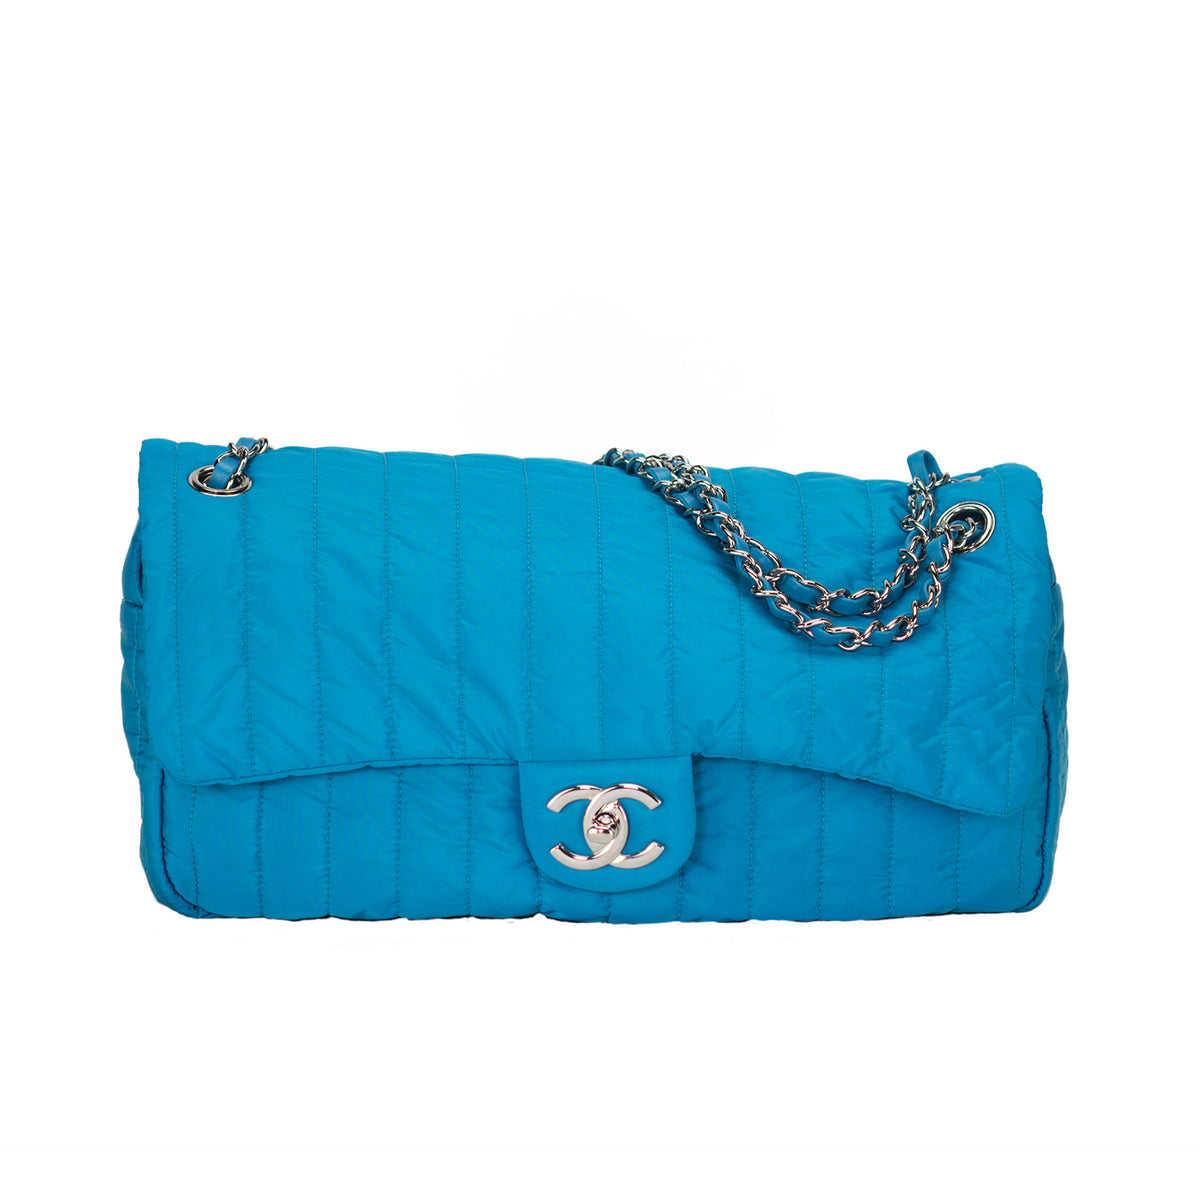 Chanel Microfiber Turquoise Classic Flap Bag